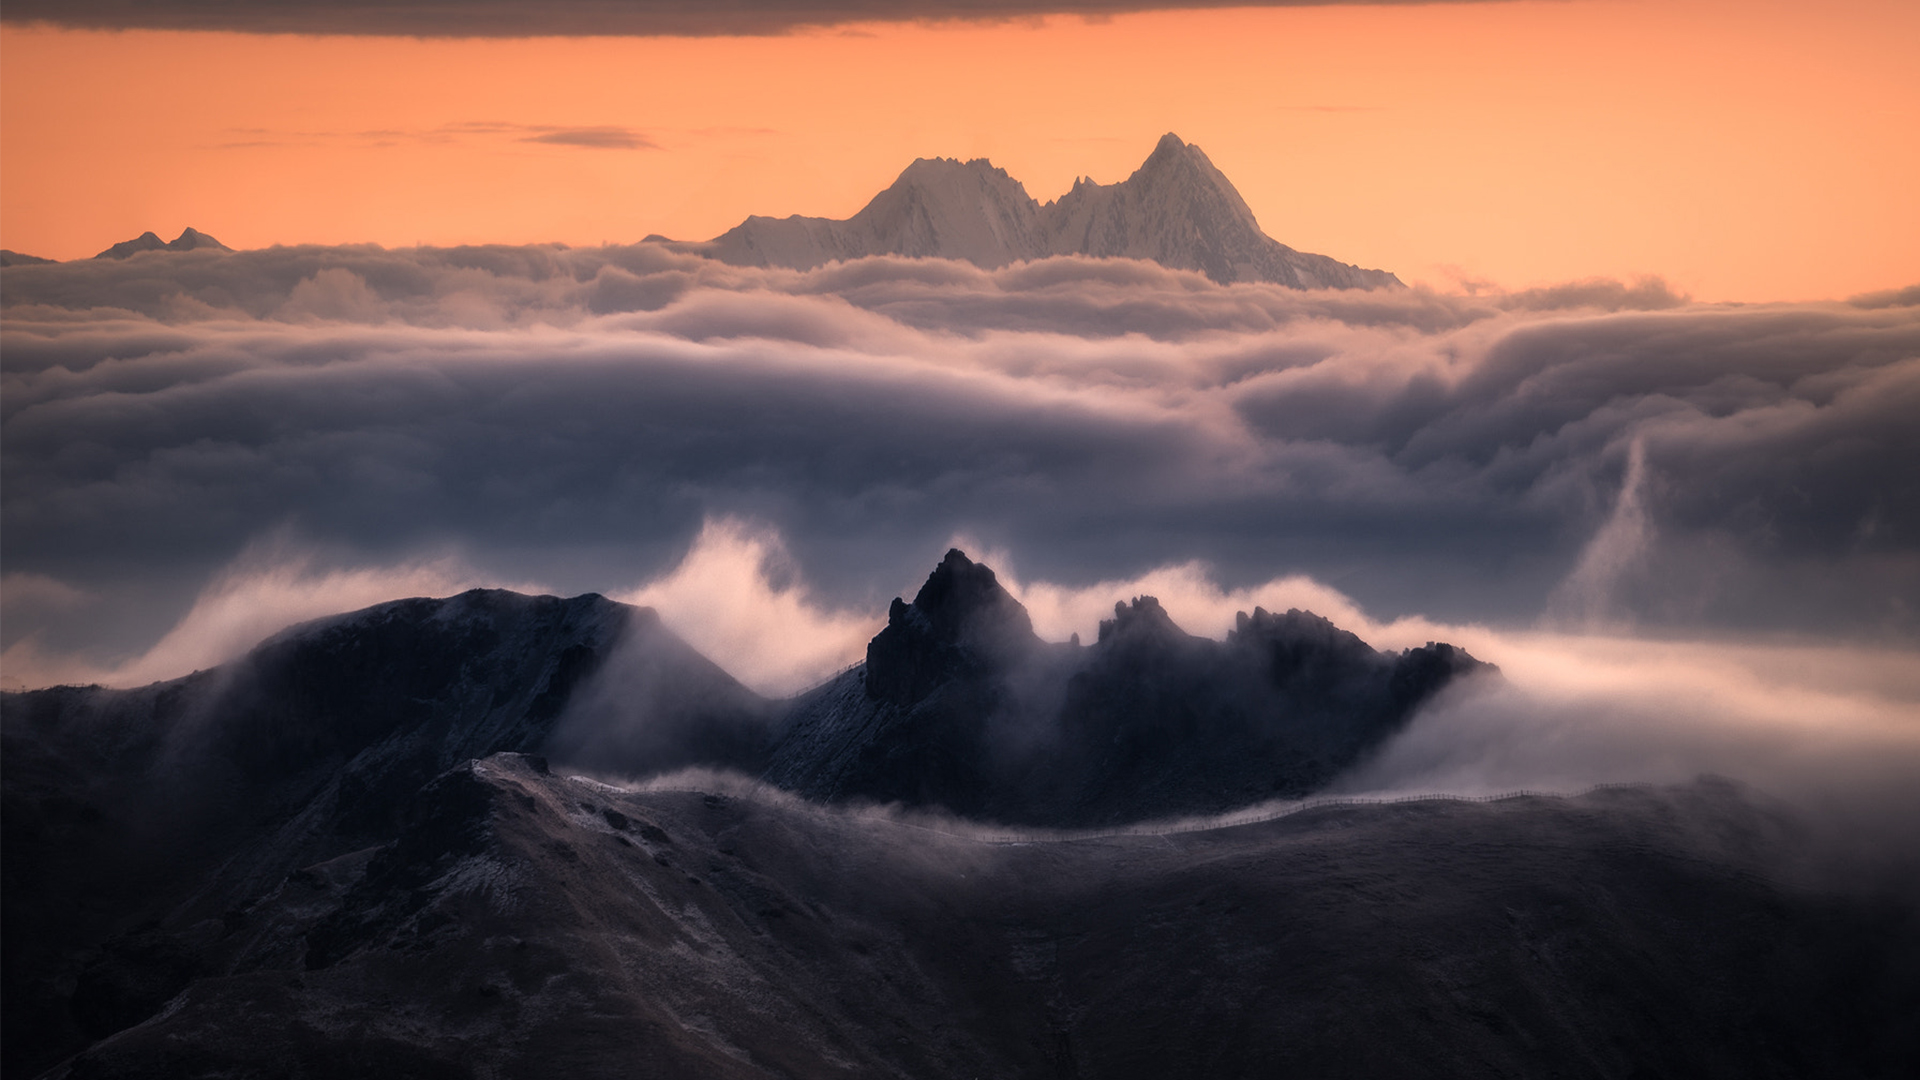 General 1920x1080 nature landscape mountains clouds mist sunset 500px Daniel Laan photography